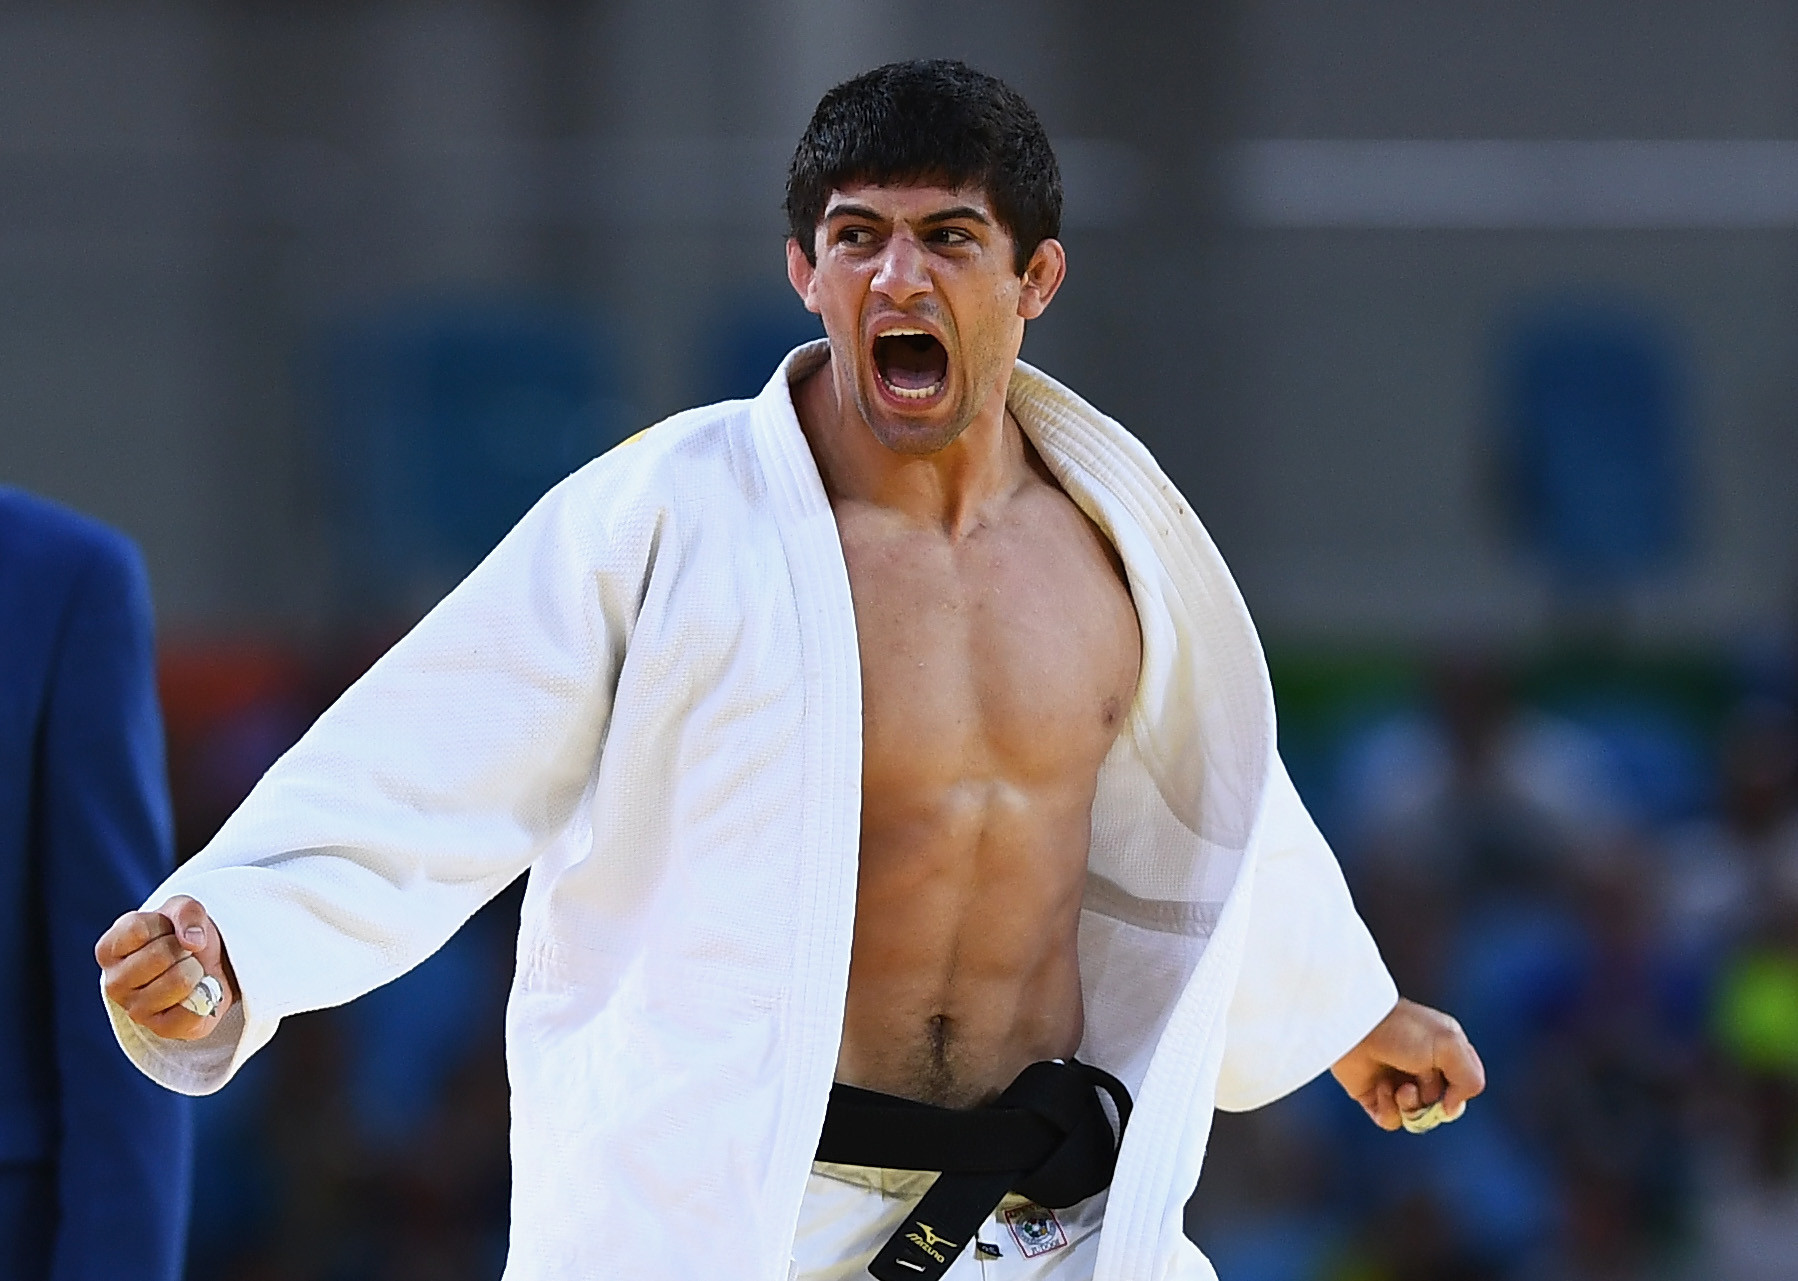 IJF World Judo Tour reaches Georgia with Tbilisi Grand Prix